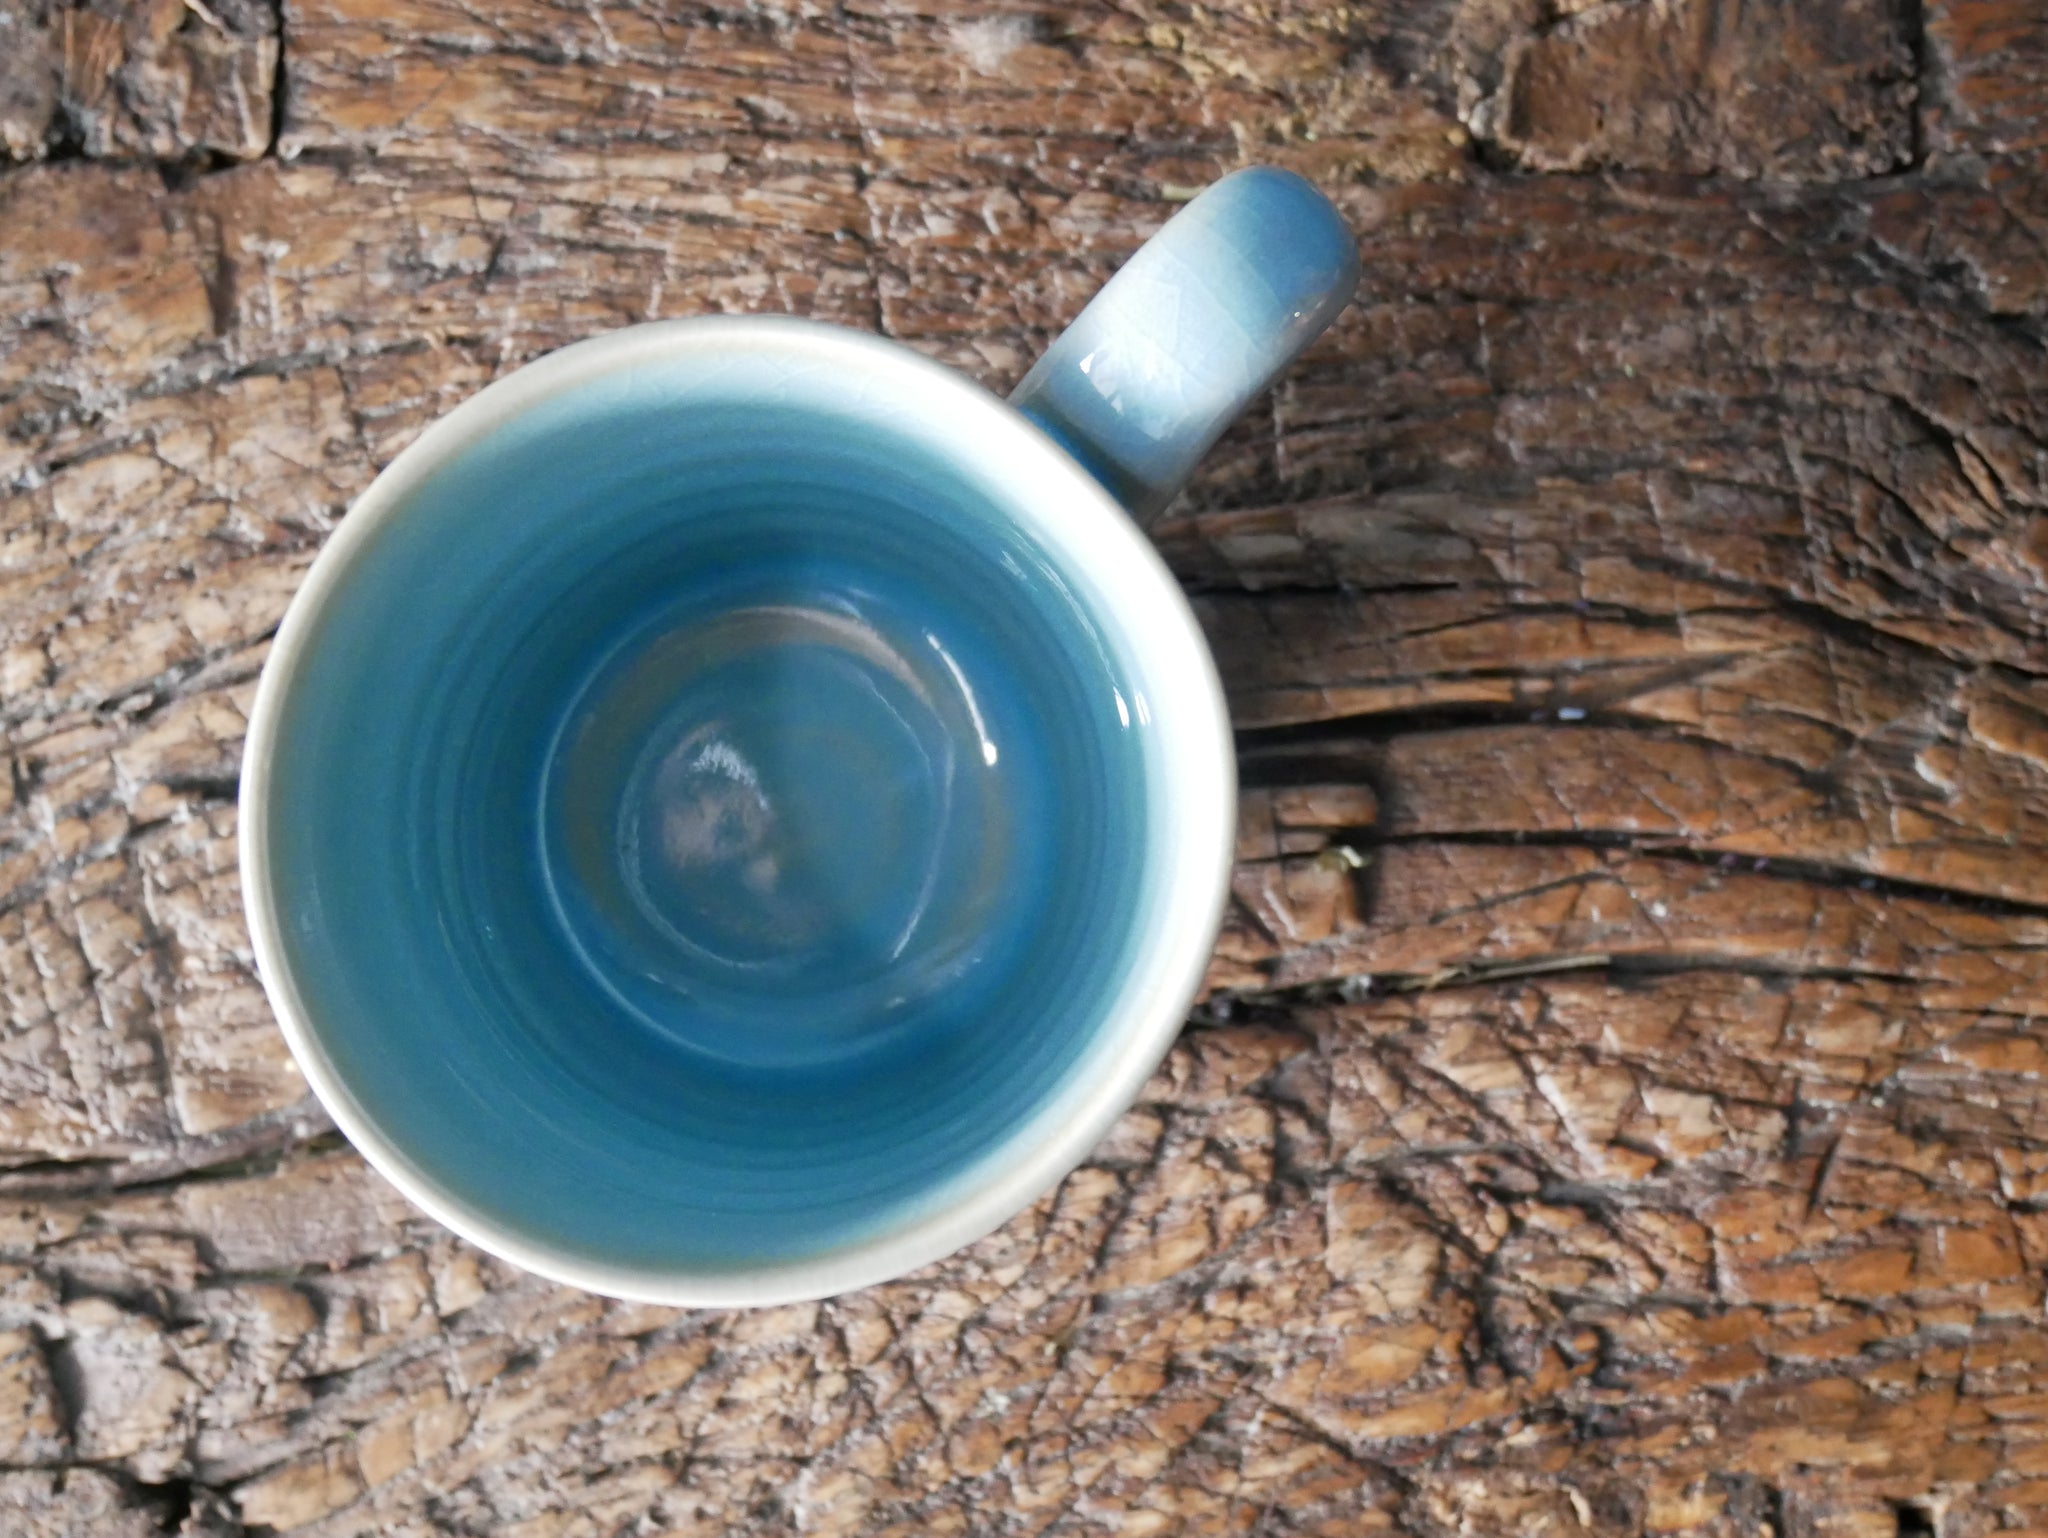 Blue Celadon Cup - I